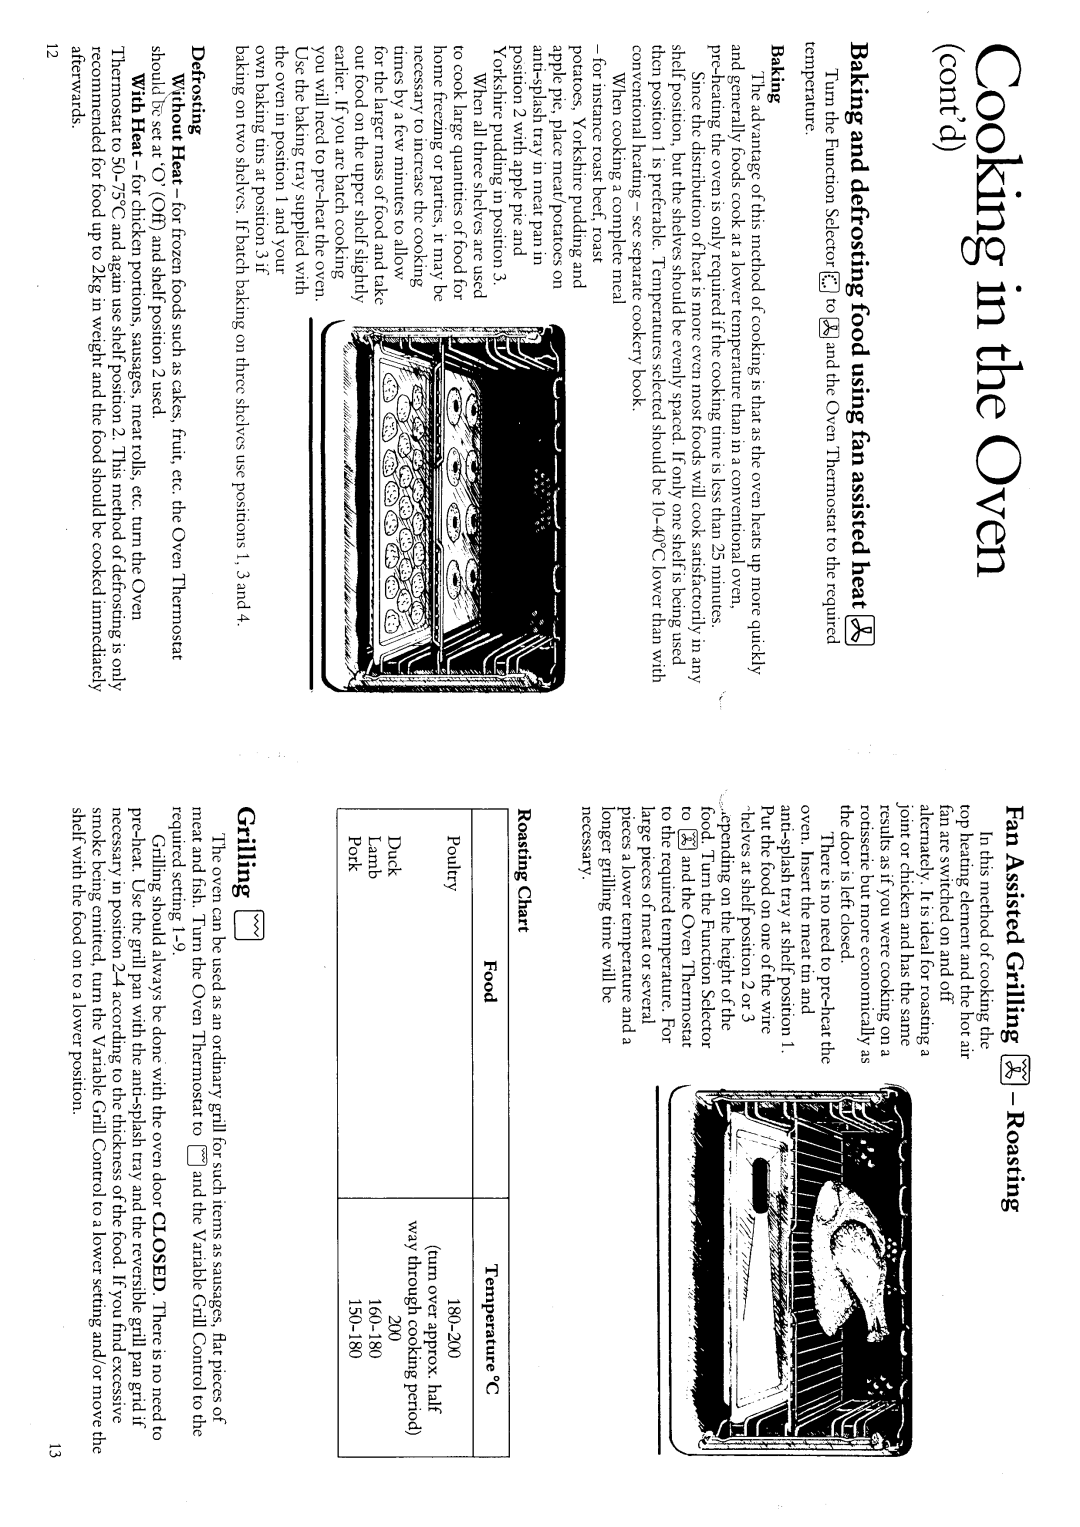 Hotpoint 63210 manual 